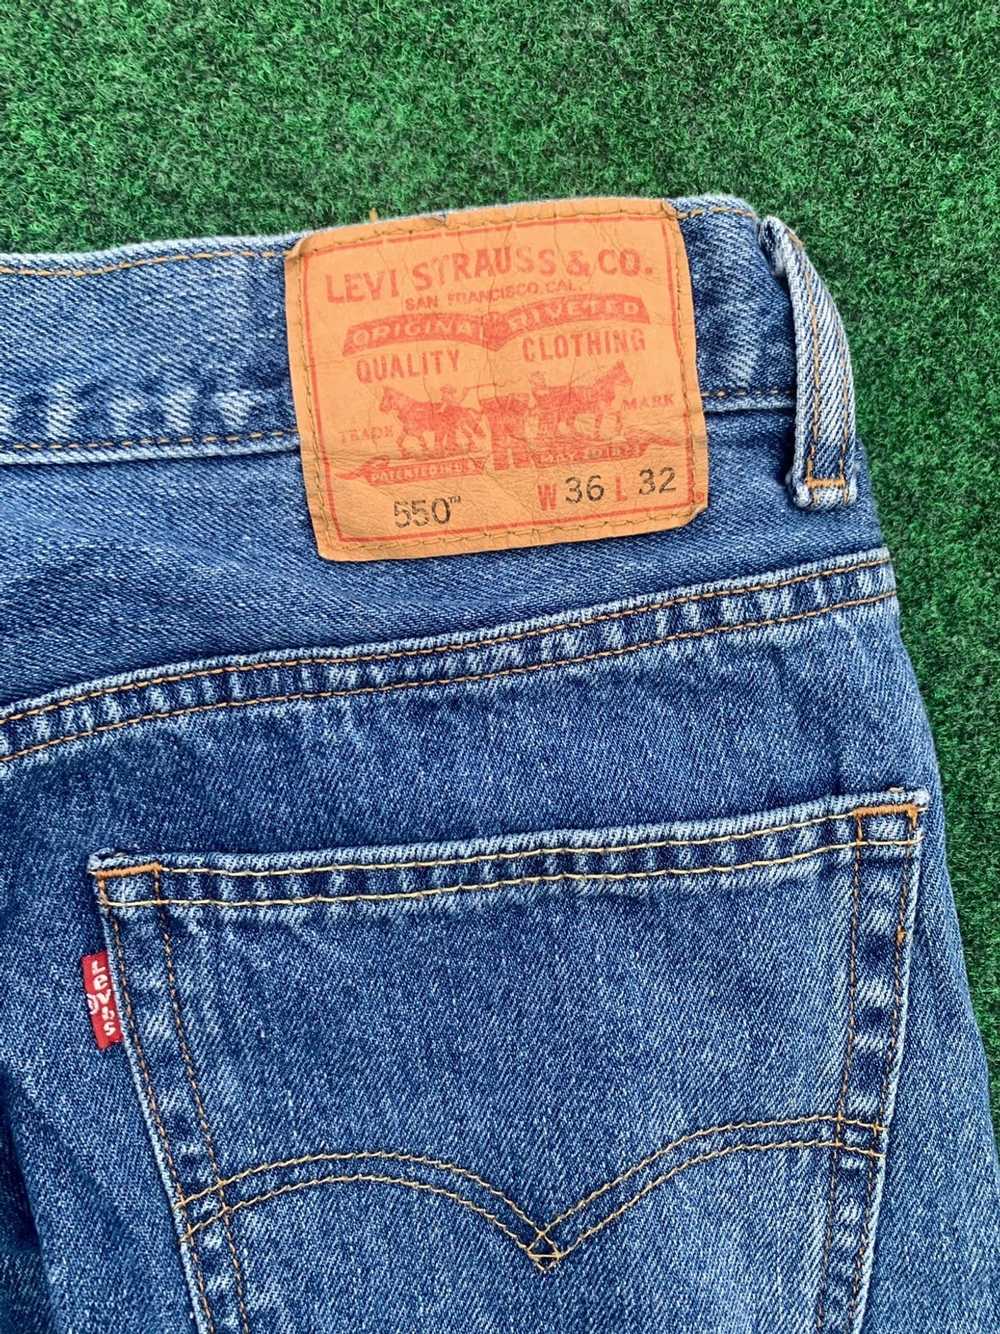 Levi's Vintage Levi’s 550 dark wash jeans - image 5